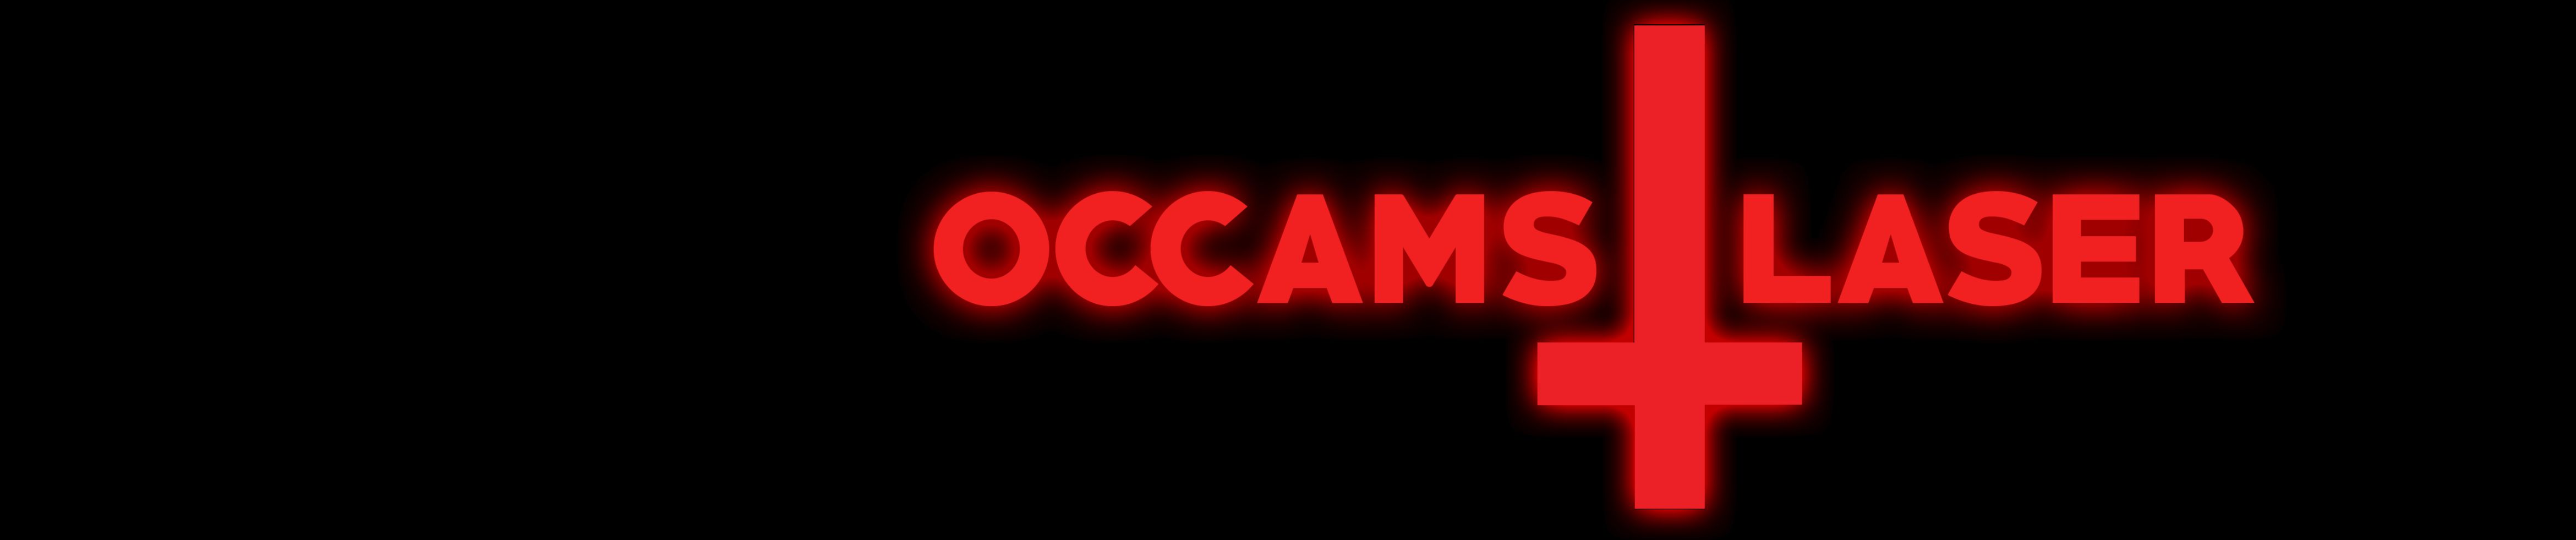 Occam's Laser - New Bllod - Music Review